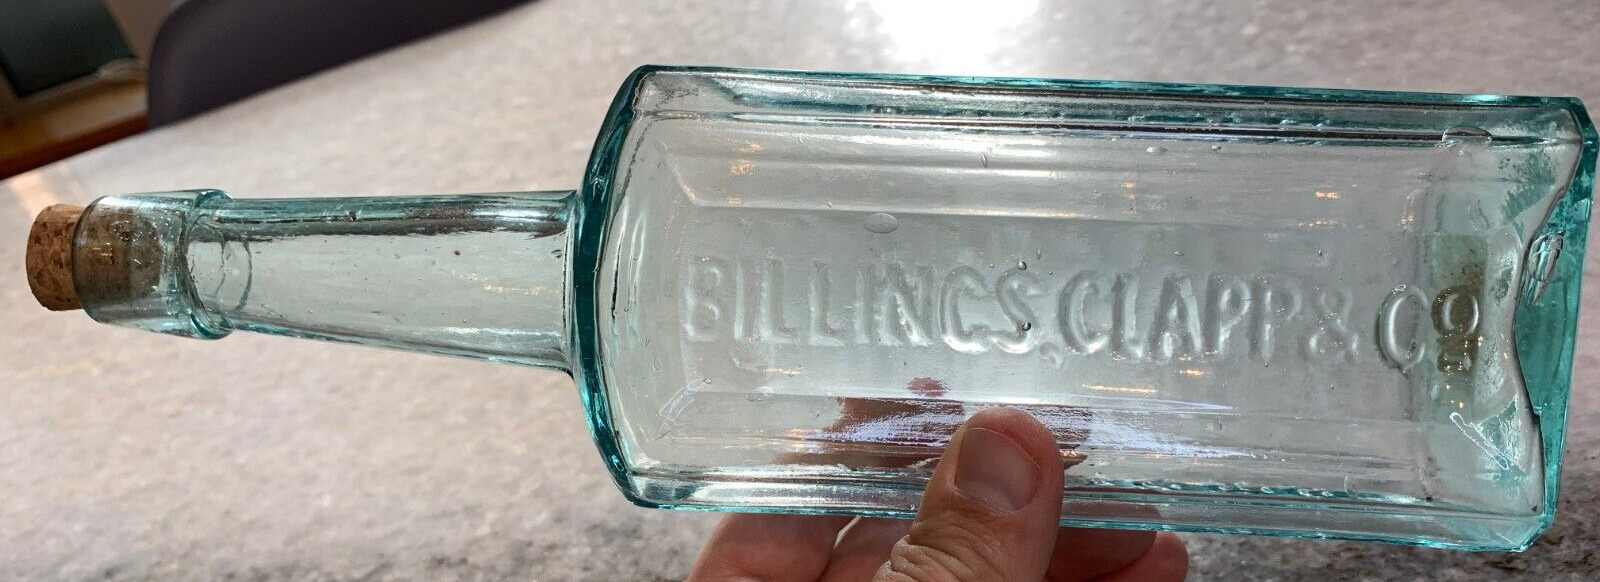 RARE 1870s Billings Clapp & Co [J. R. Nichols] Chemist Bottle Applied Top BOSTON